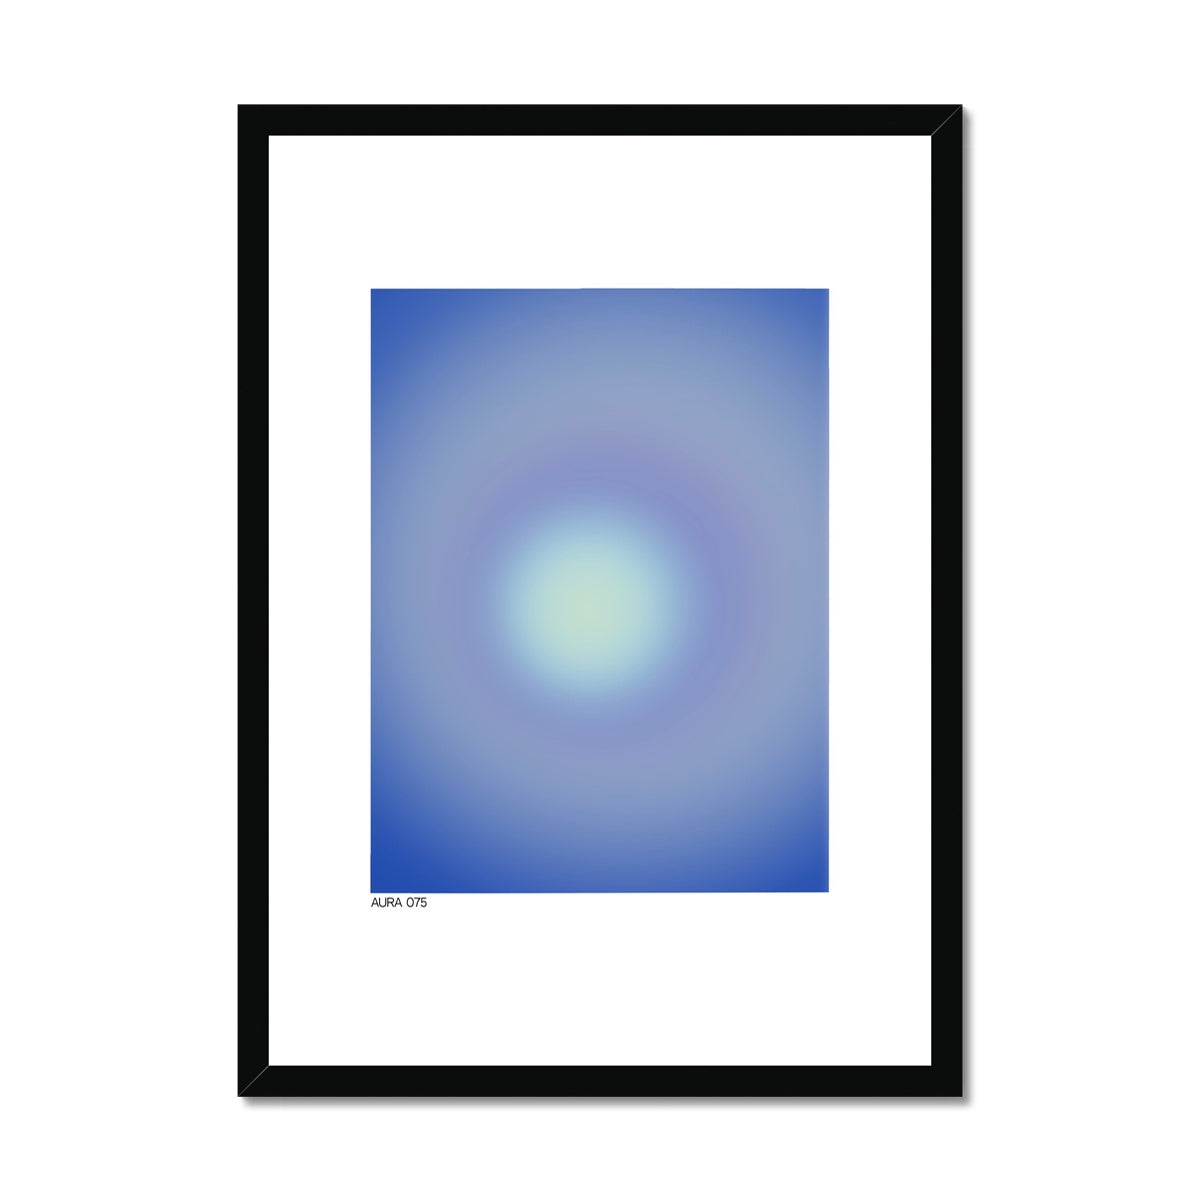 aura 075 Framed & Mounted Print